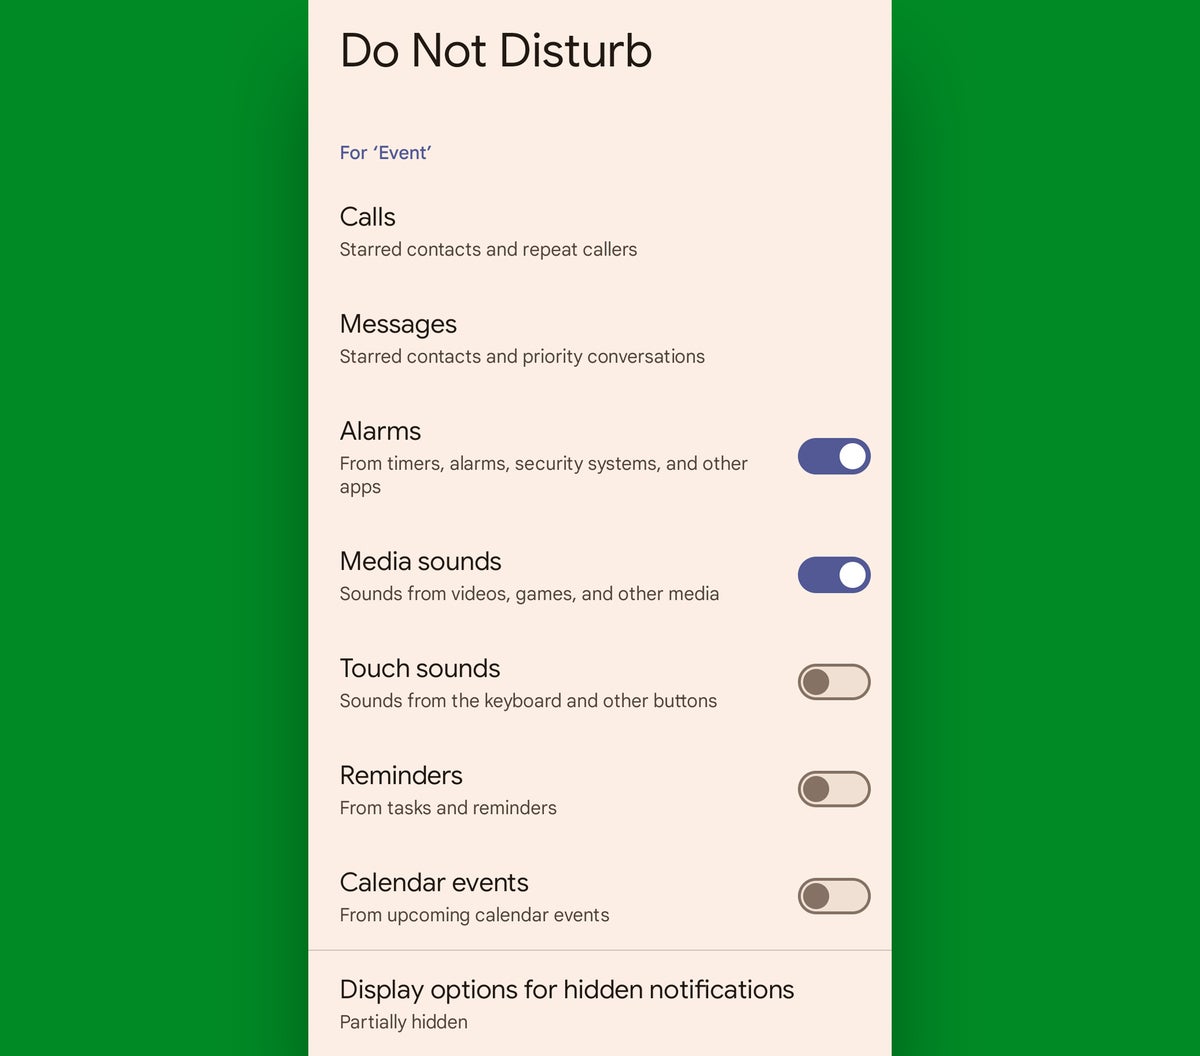 Google Calendar Android: Do not disturb settings